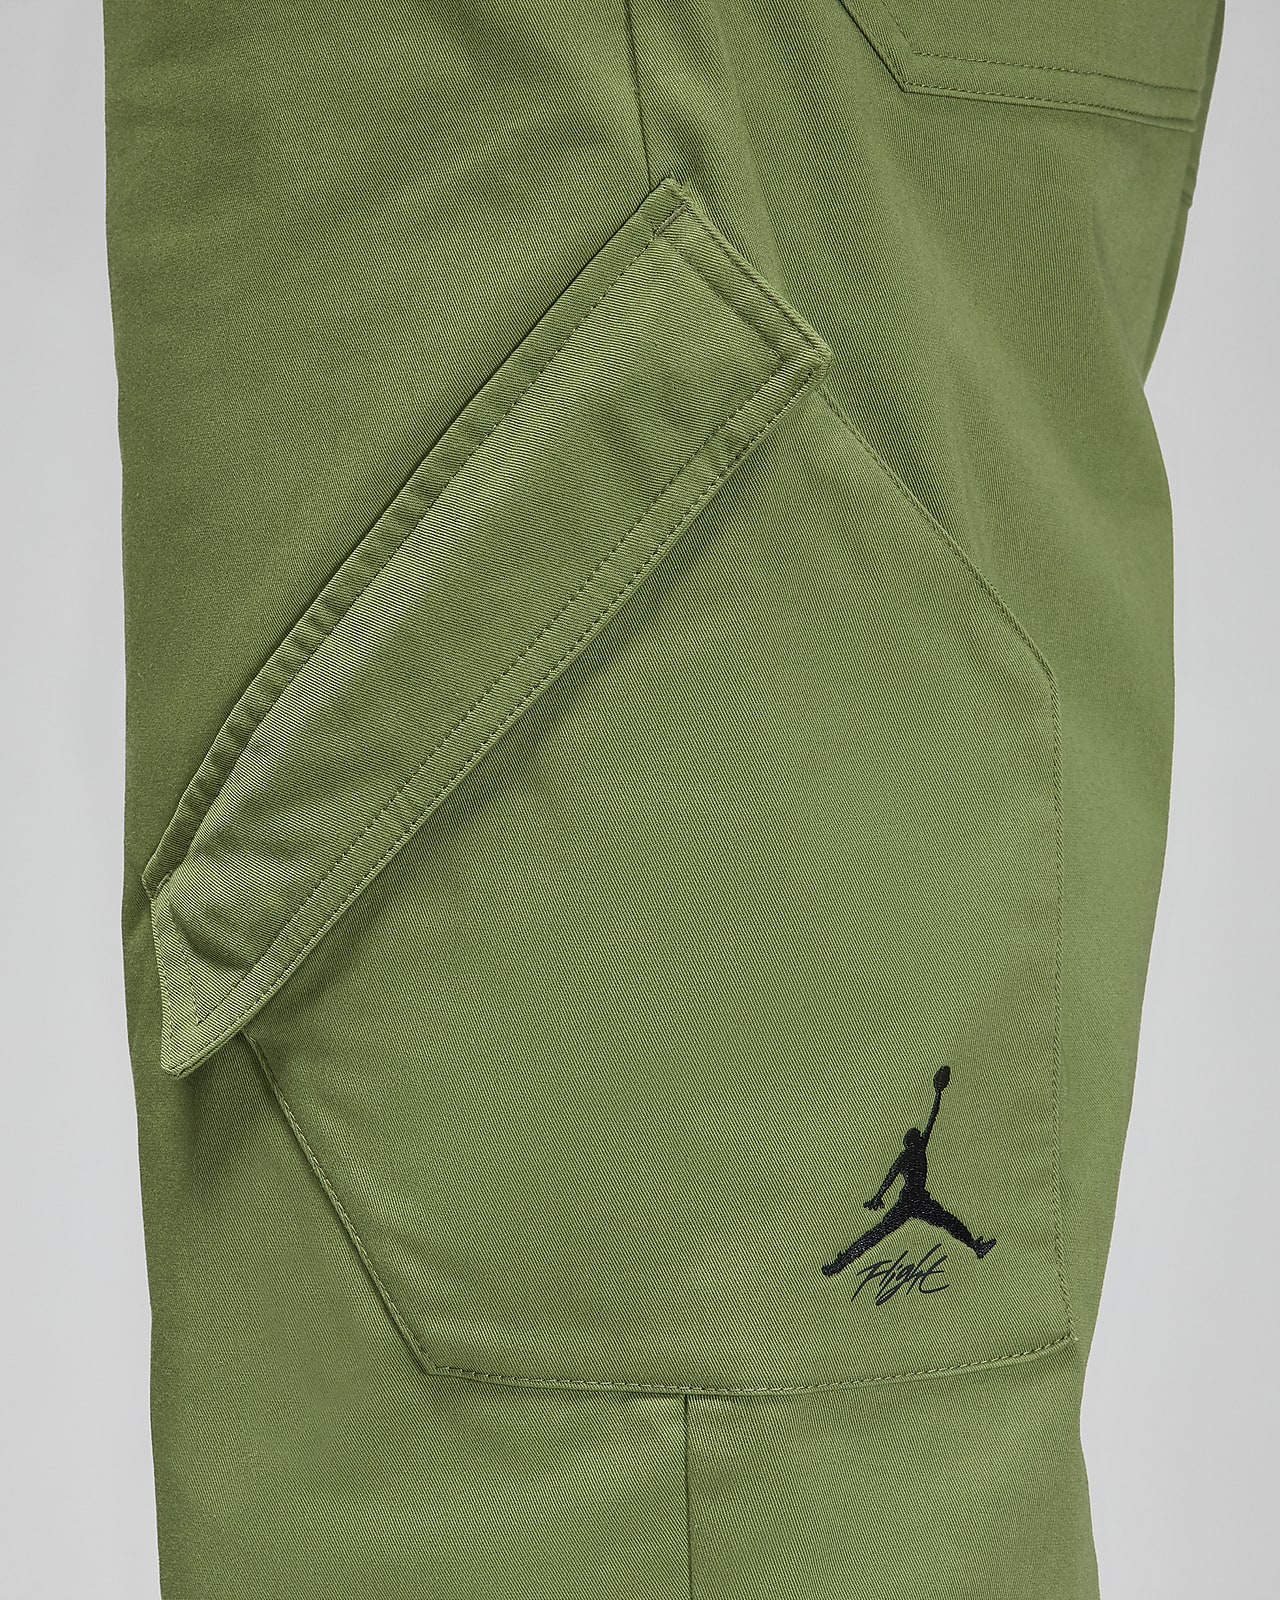 Jordan Essentials Men's Chicago Pants